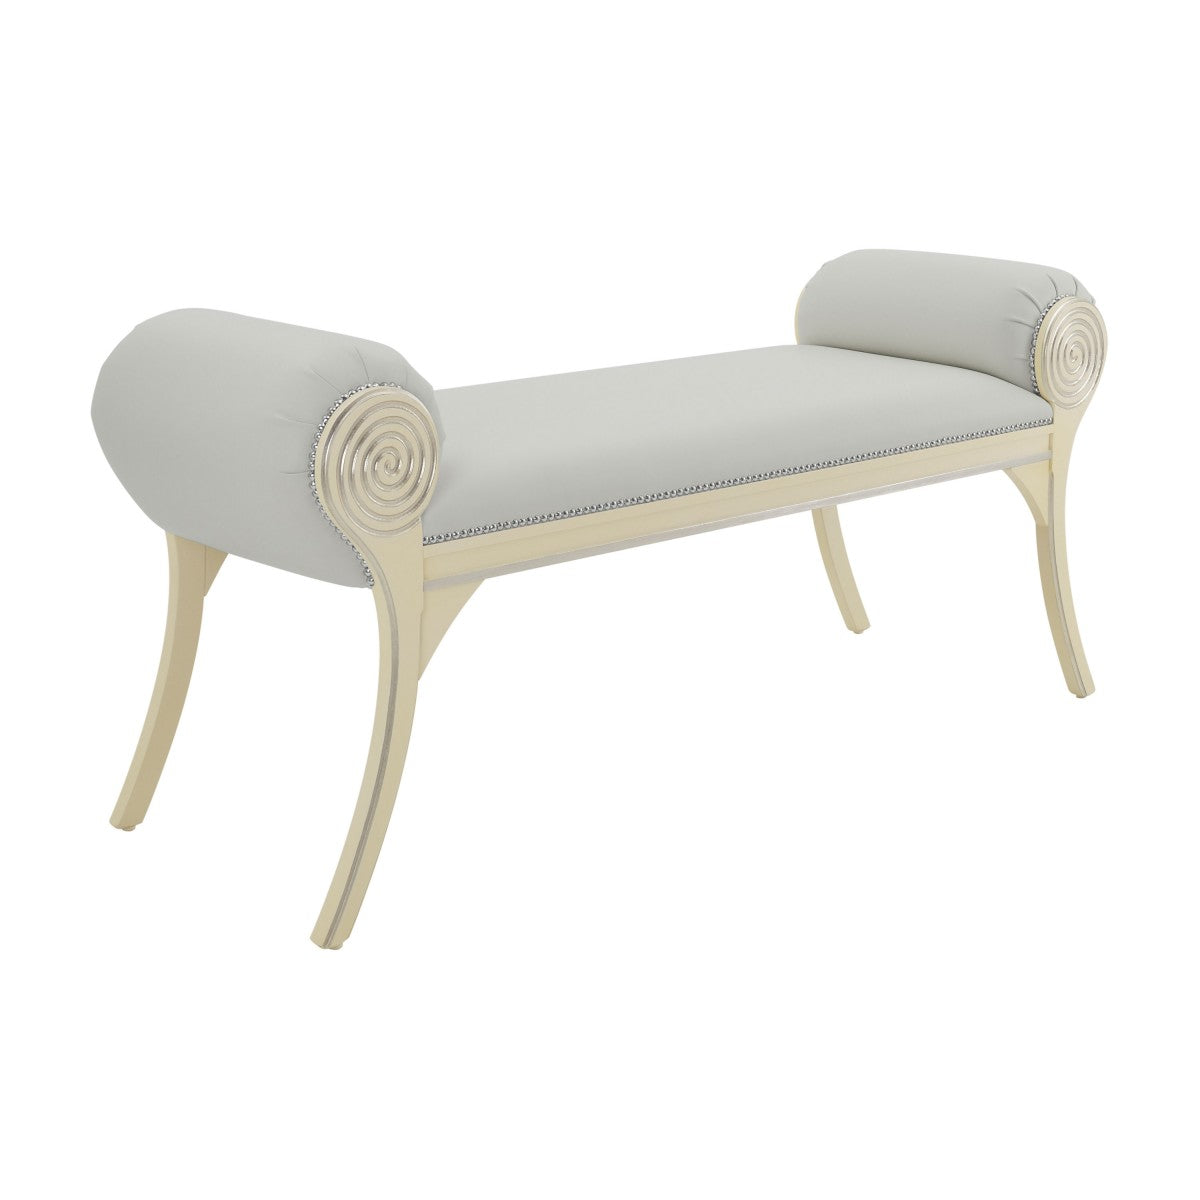 Crispun Bespoke Upholstered Luxury Statement Bench MS309Q Custom Made To Order